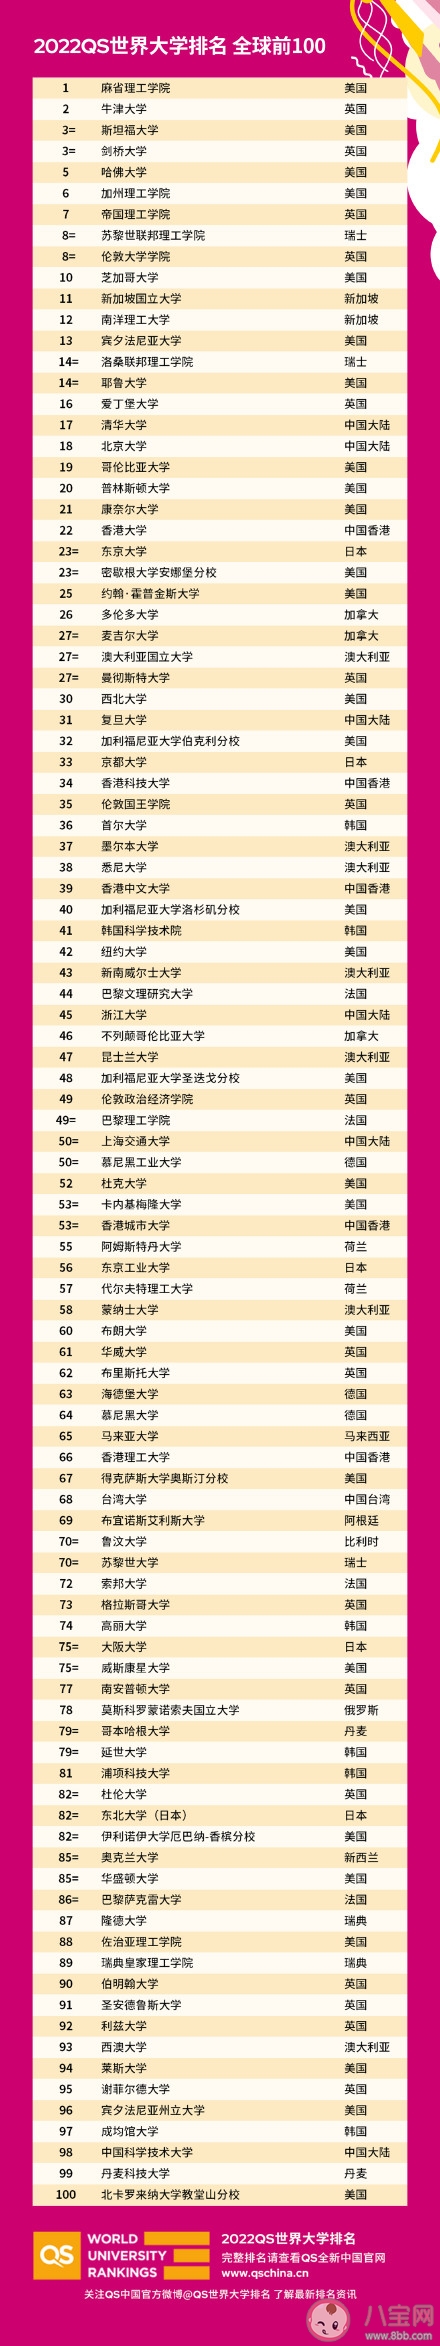 2022QS世界大学排名完整版榜单 中国哪些大学进入前100名